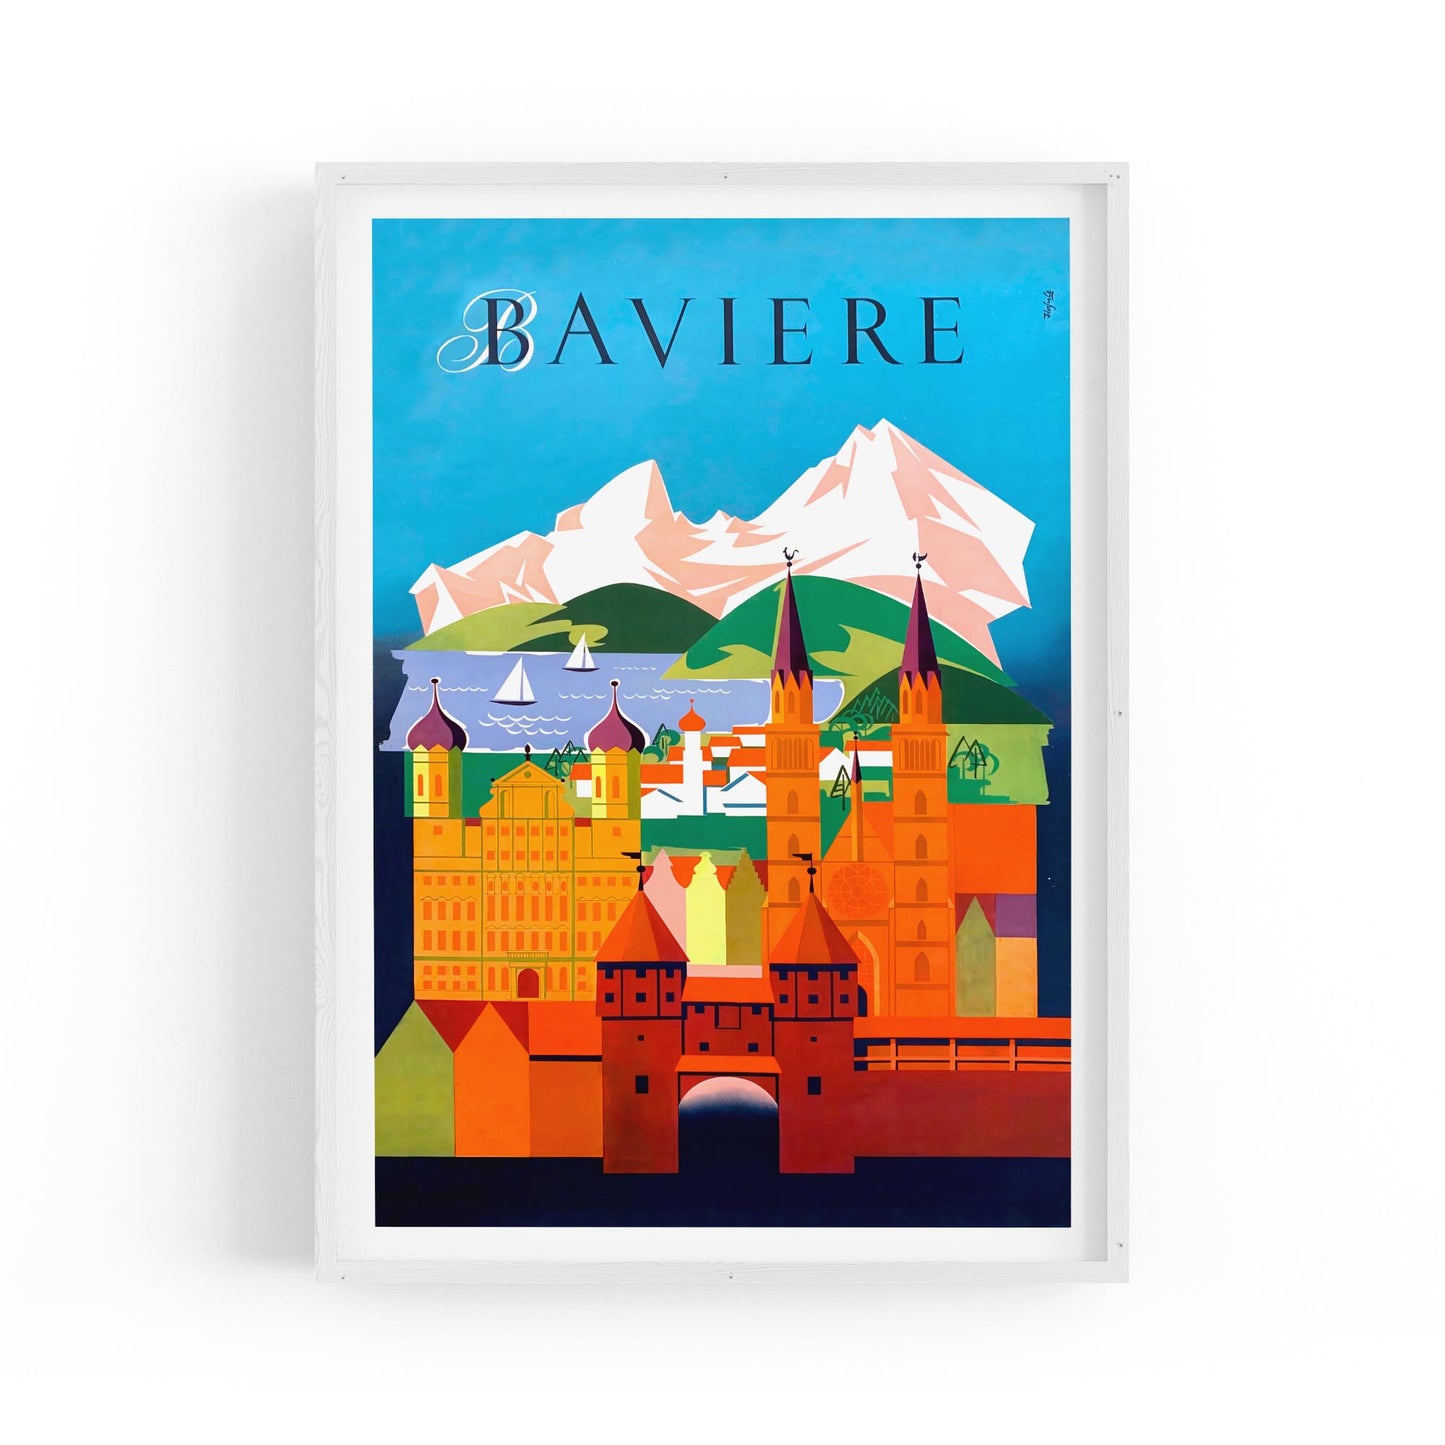 Bavaria, Germany "Baviere" by Franz Hahnle | Framed Vintage Travel Poster